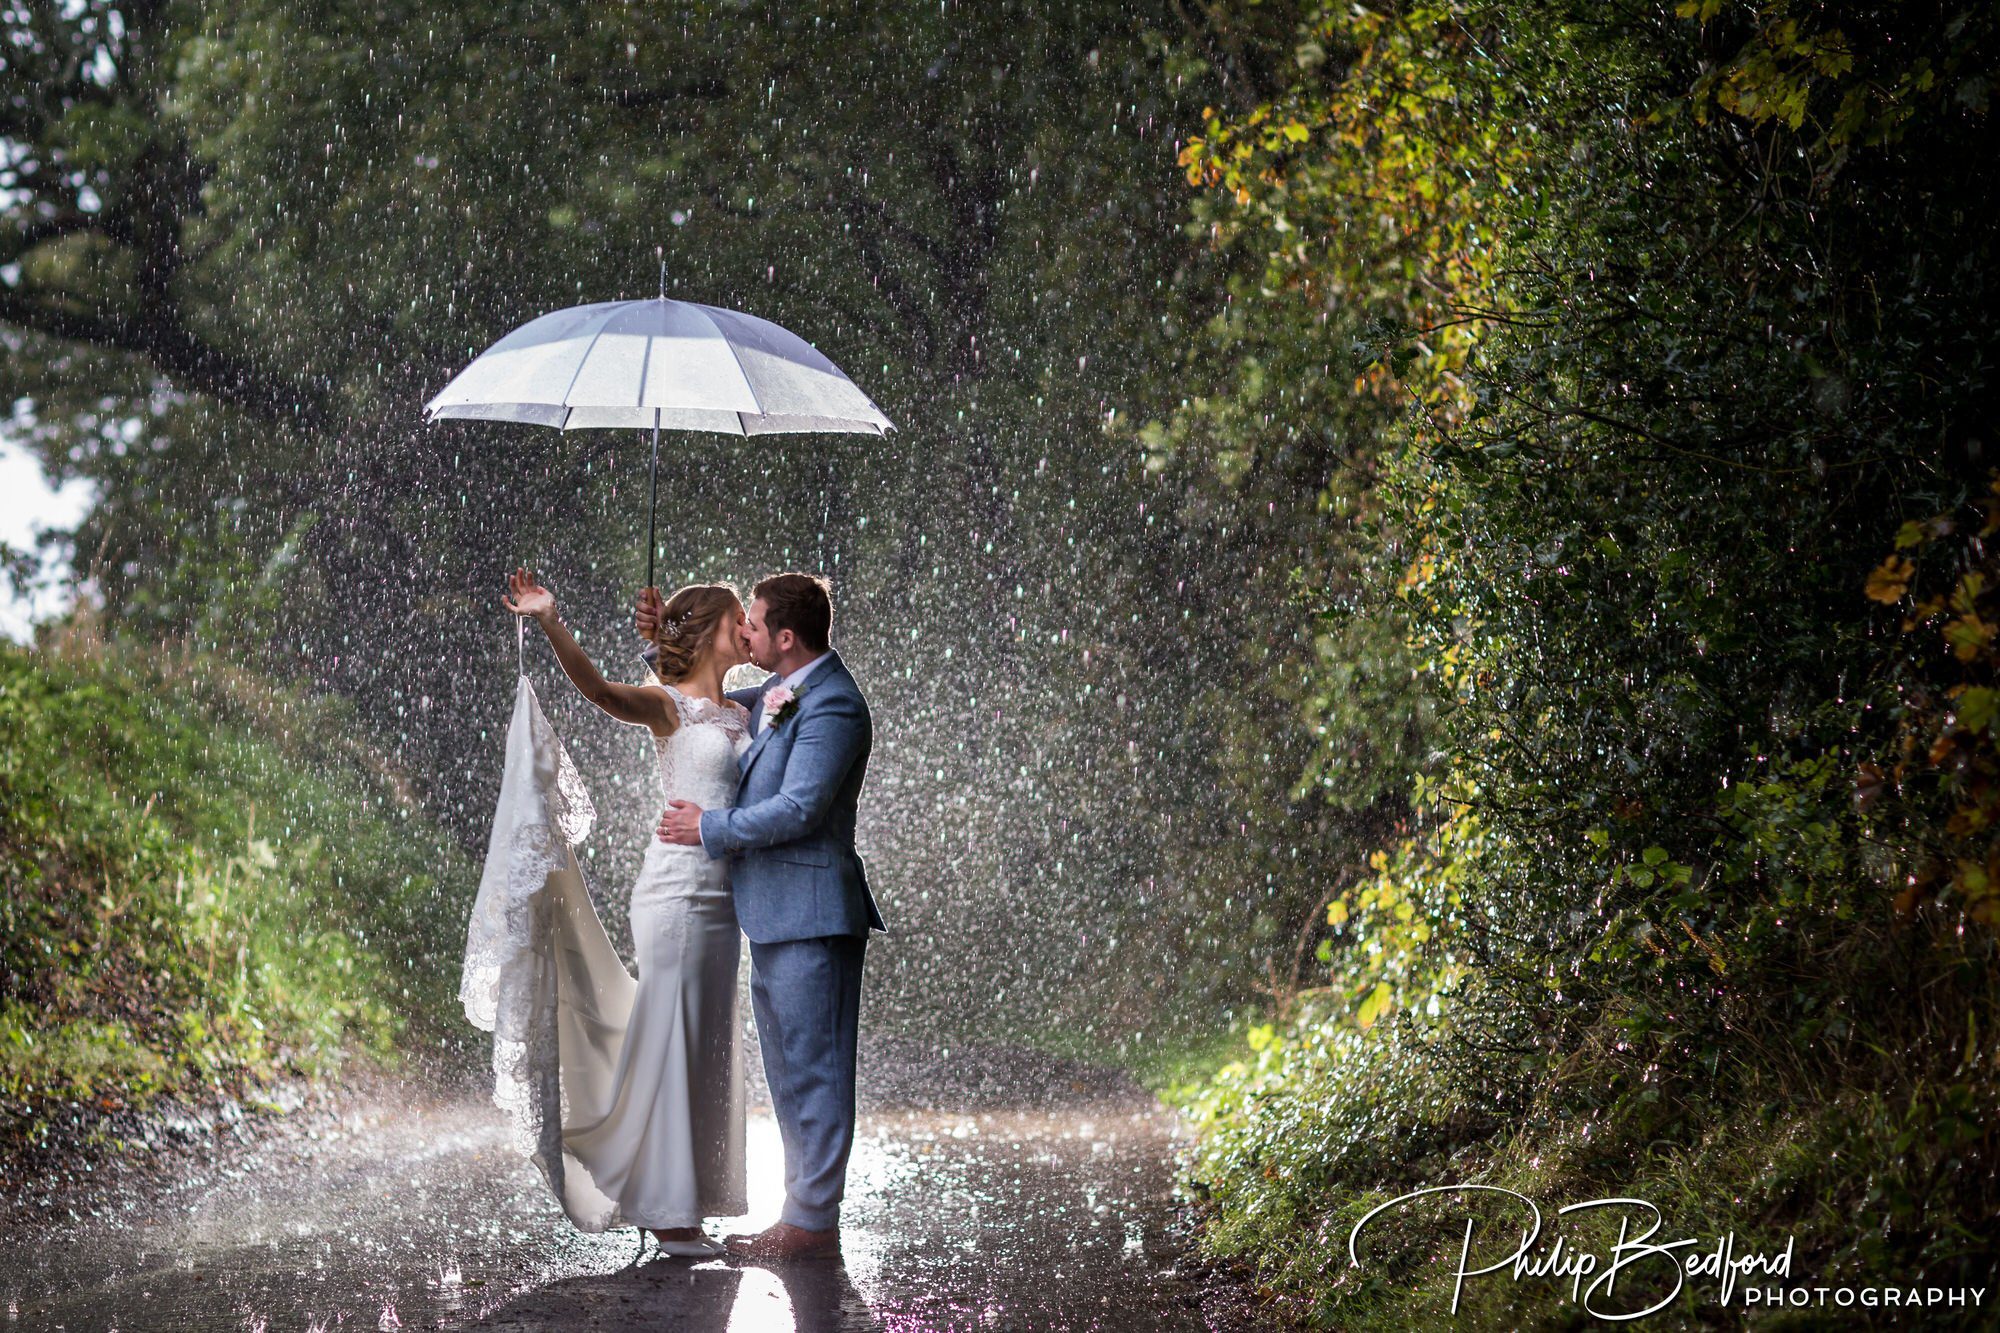 Fitzleroi Barn Autumn Wedding: Bride and Groom in the rain